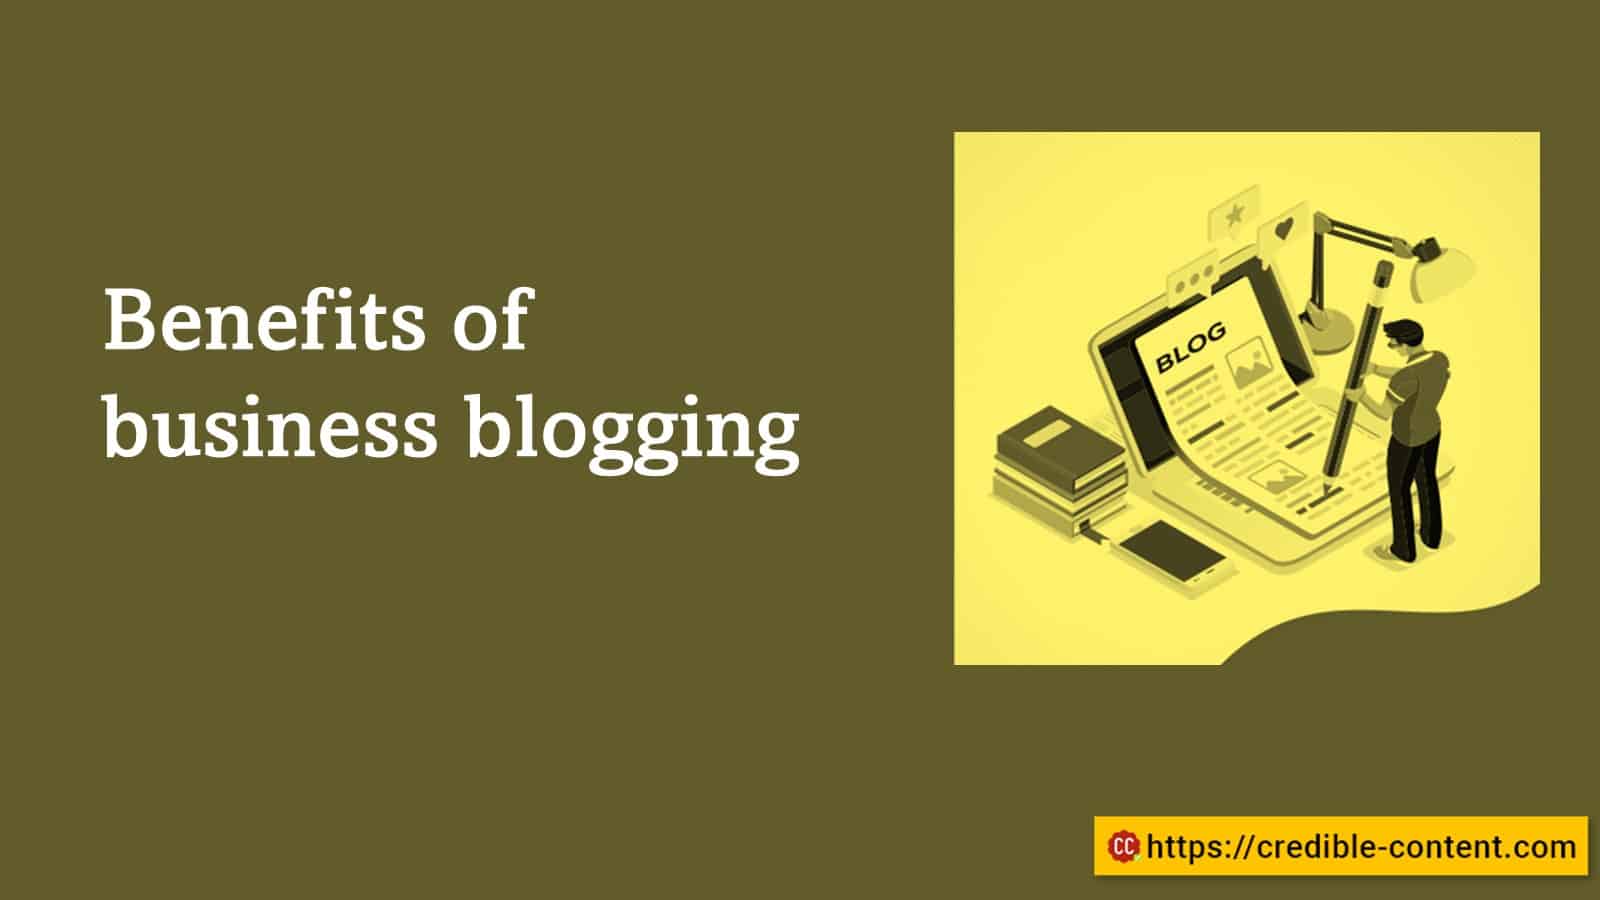 Benefits of business blogging